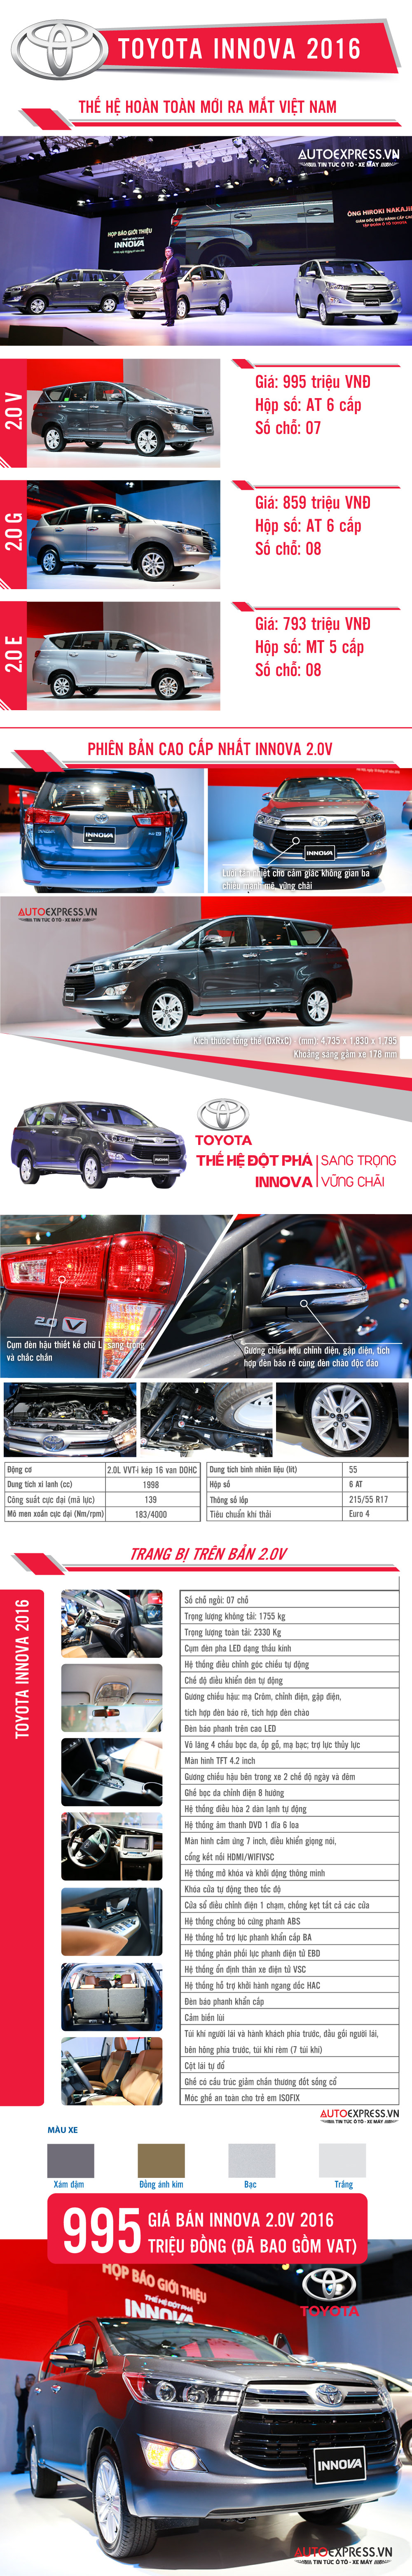 Toyota Innova 2016 2.0V giá 995 triệu đồng vừa ra mắt Việt Nam